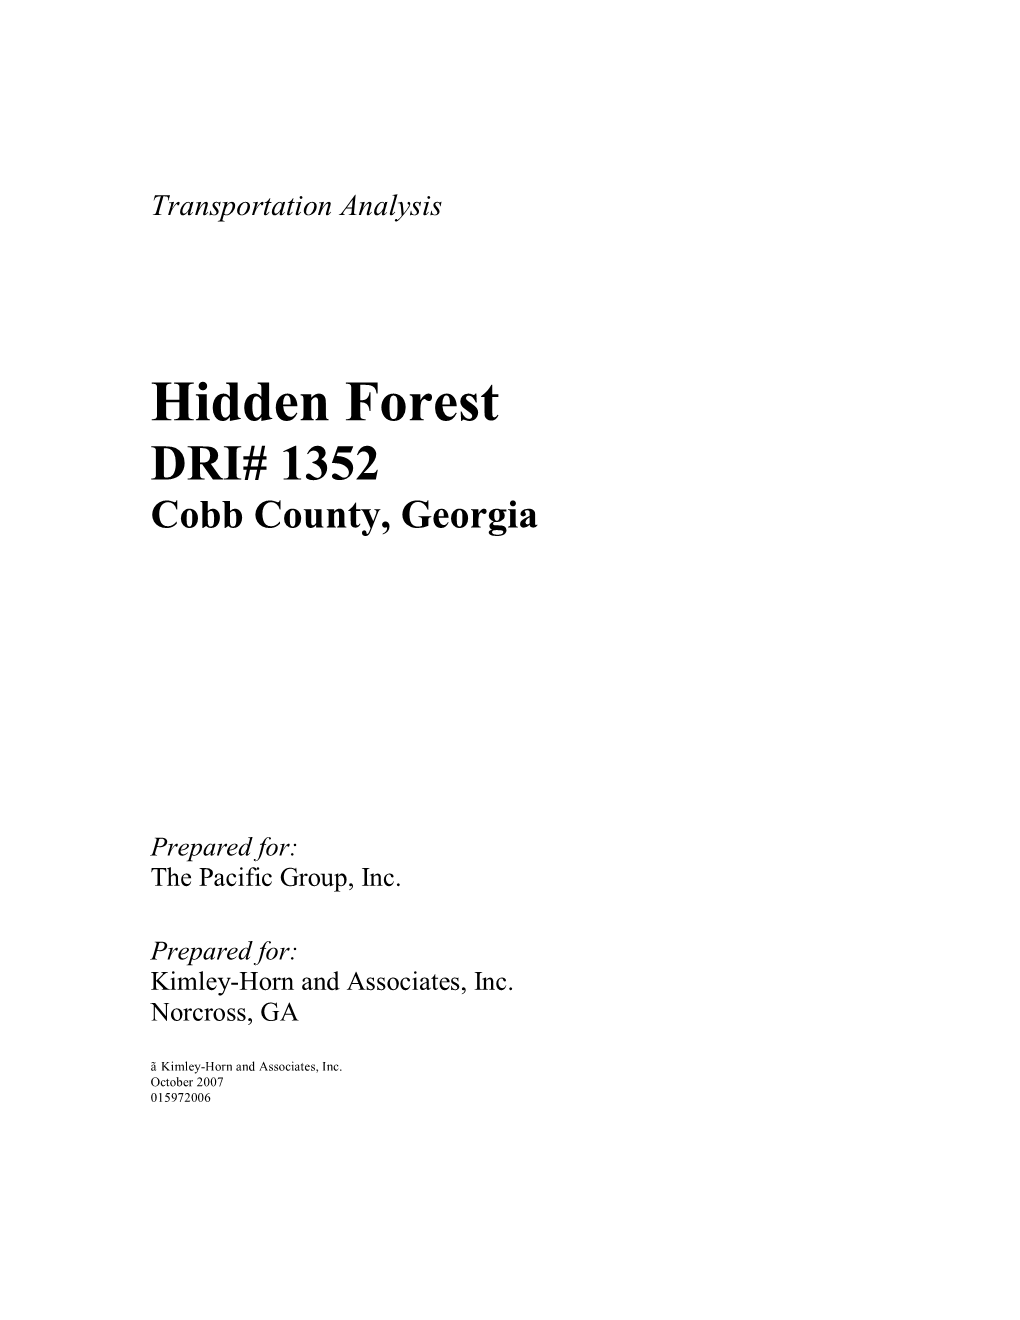 Hidden Forest DRI# 1352 Cobb County, Georgia